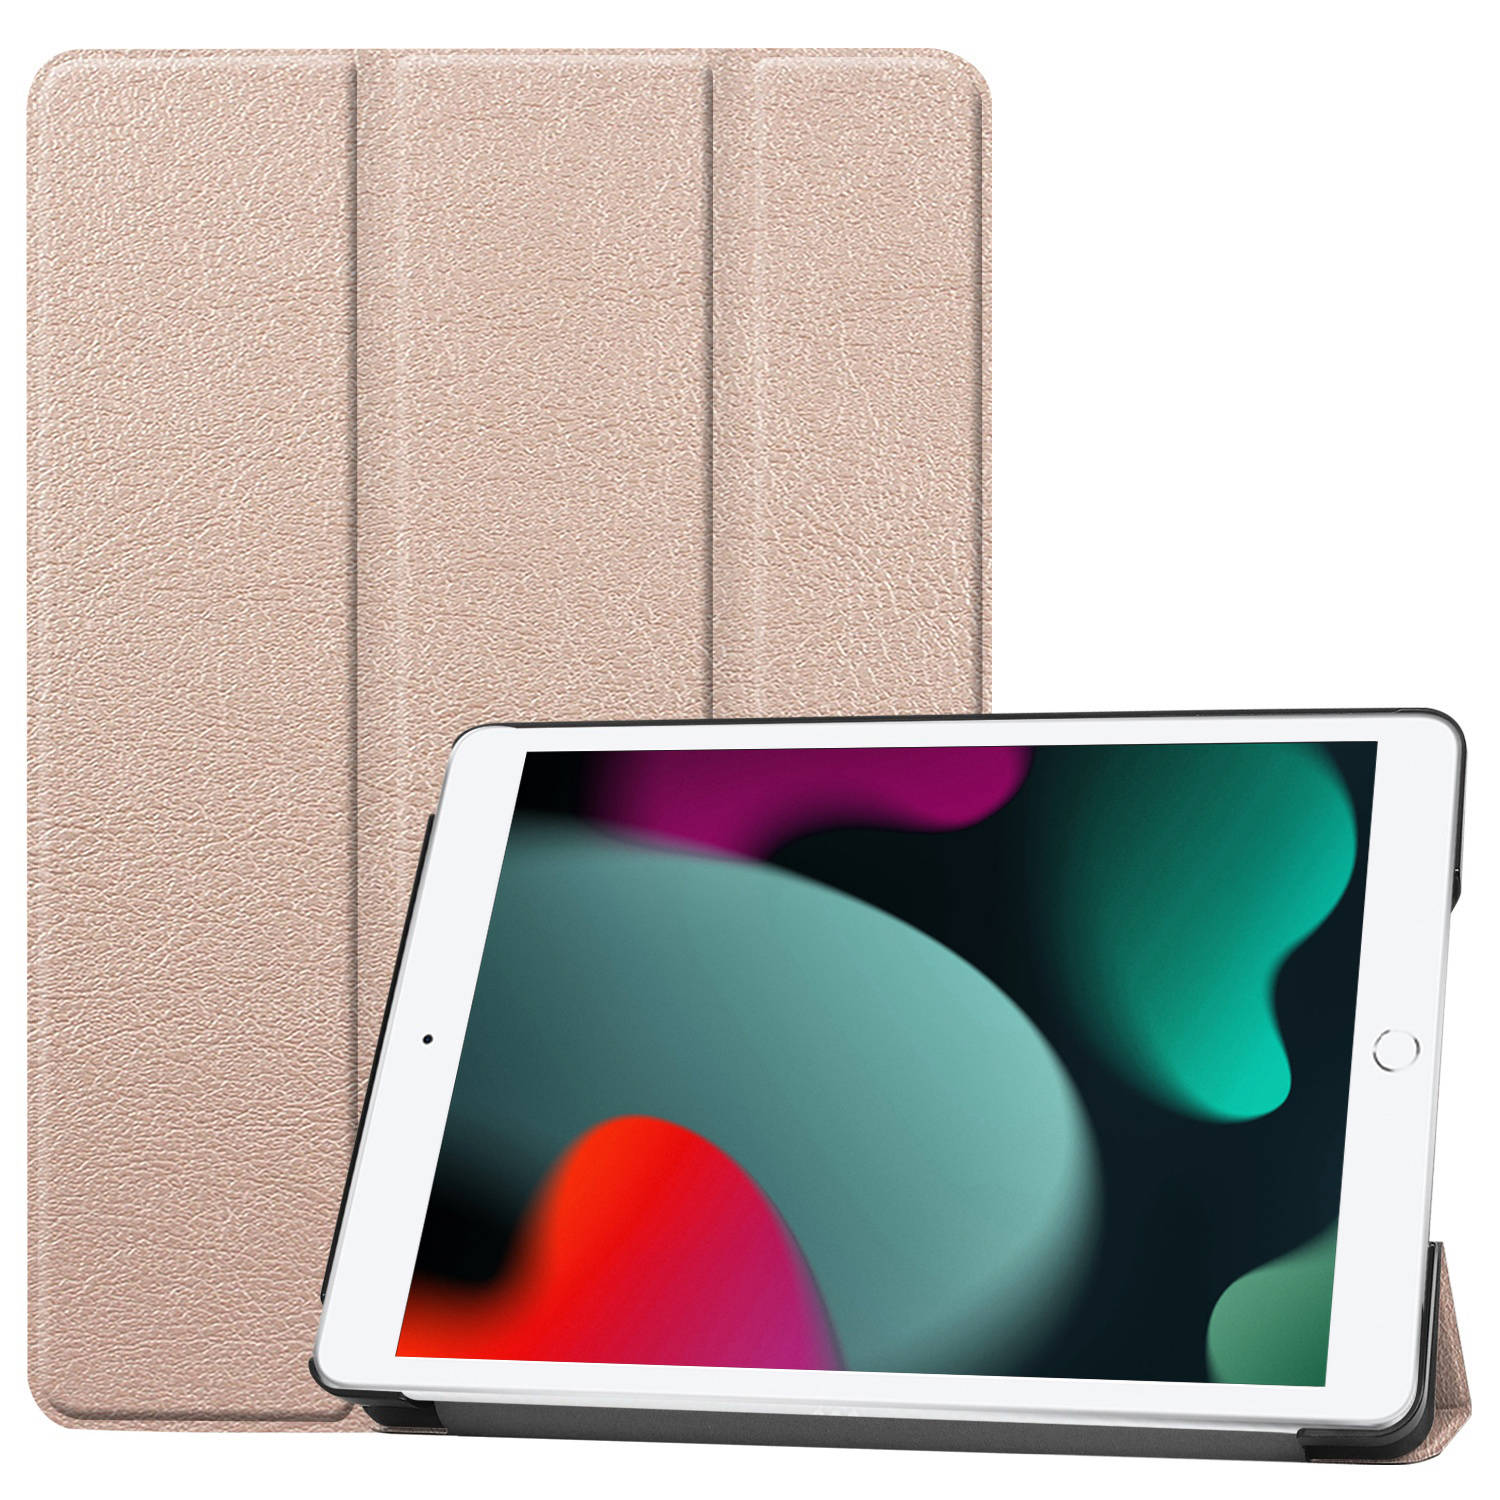 Basey iPad 10.2 2020 Hoes Book Case Hoesje - iPad 10.2 2020 Hoesje Hard Cover Case Hoes - Goud